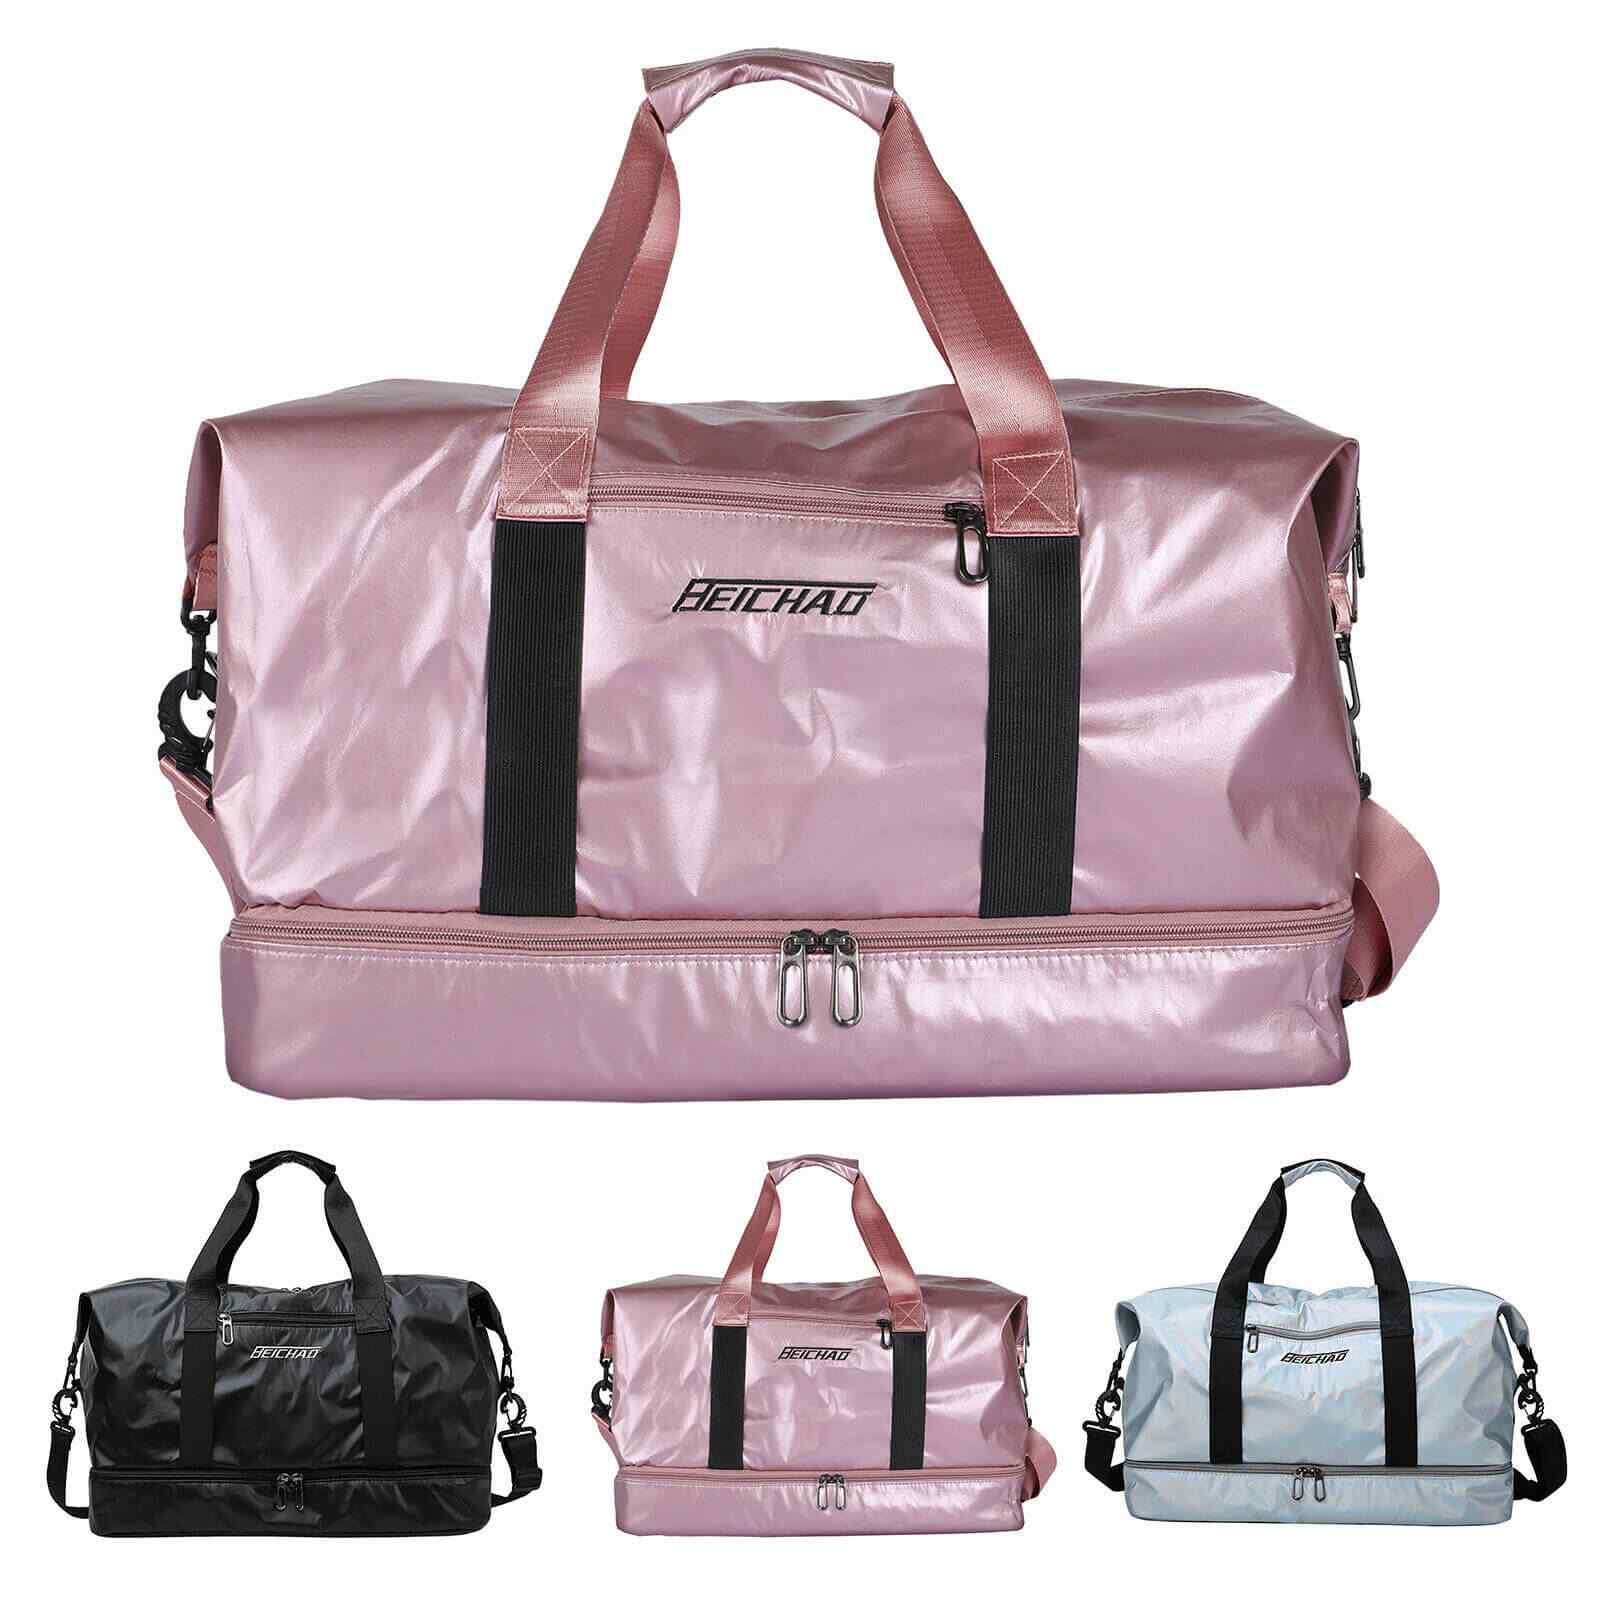 18" Large Travel Duffle Bag